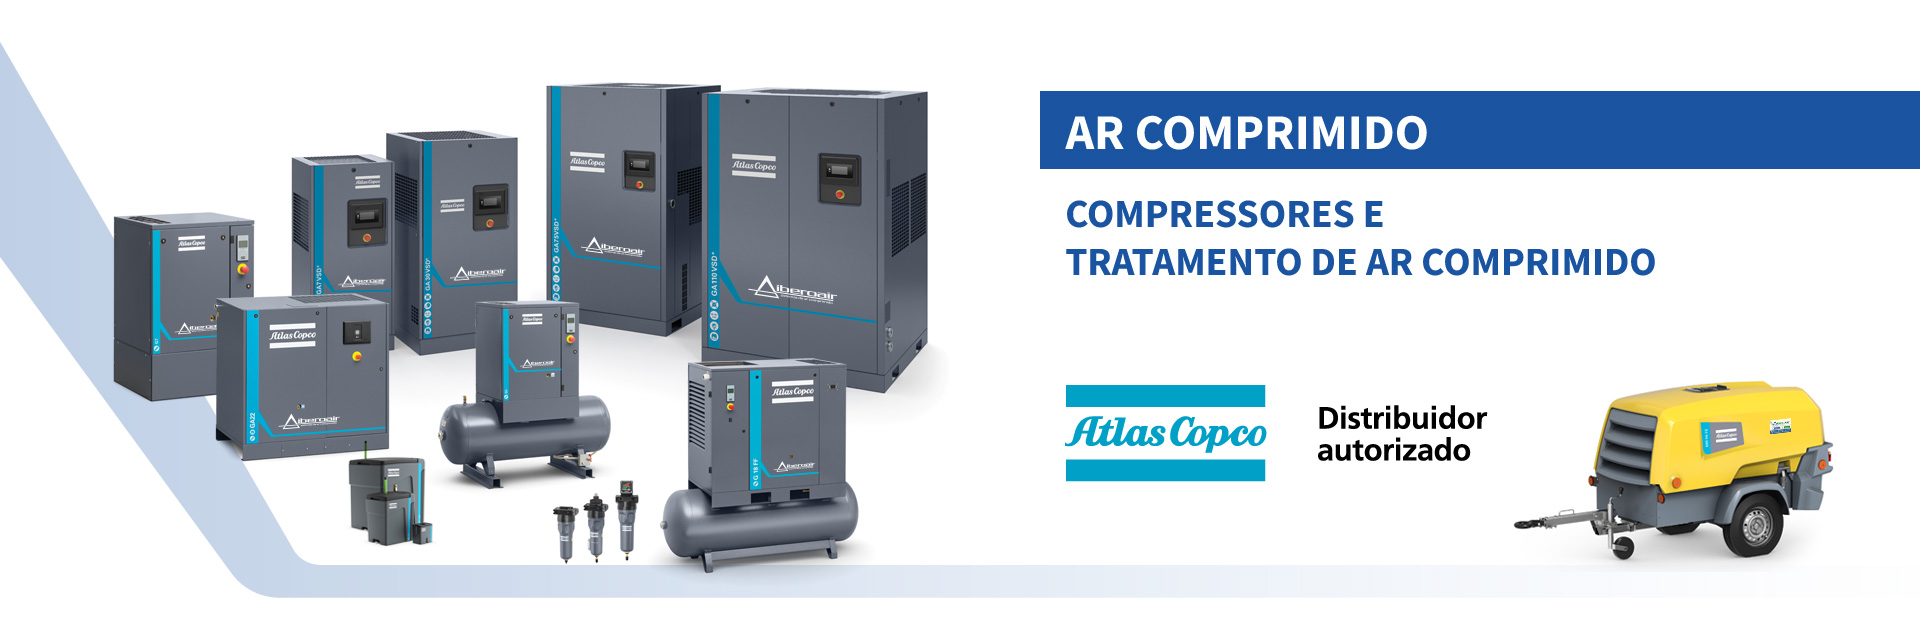 Atlas Copco Compressores e Tratamento de Ar Comprimido